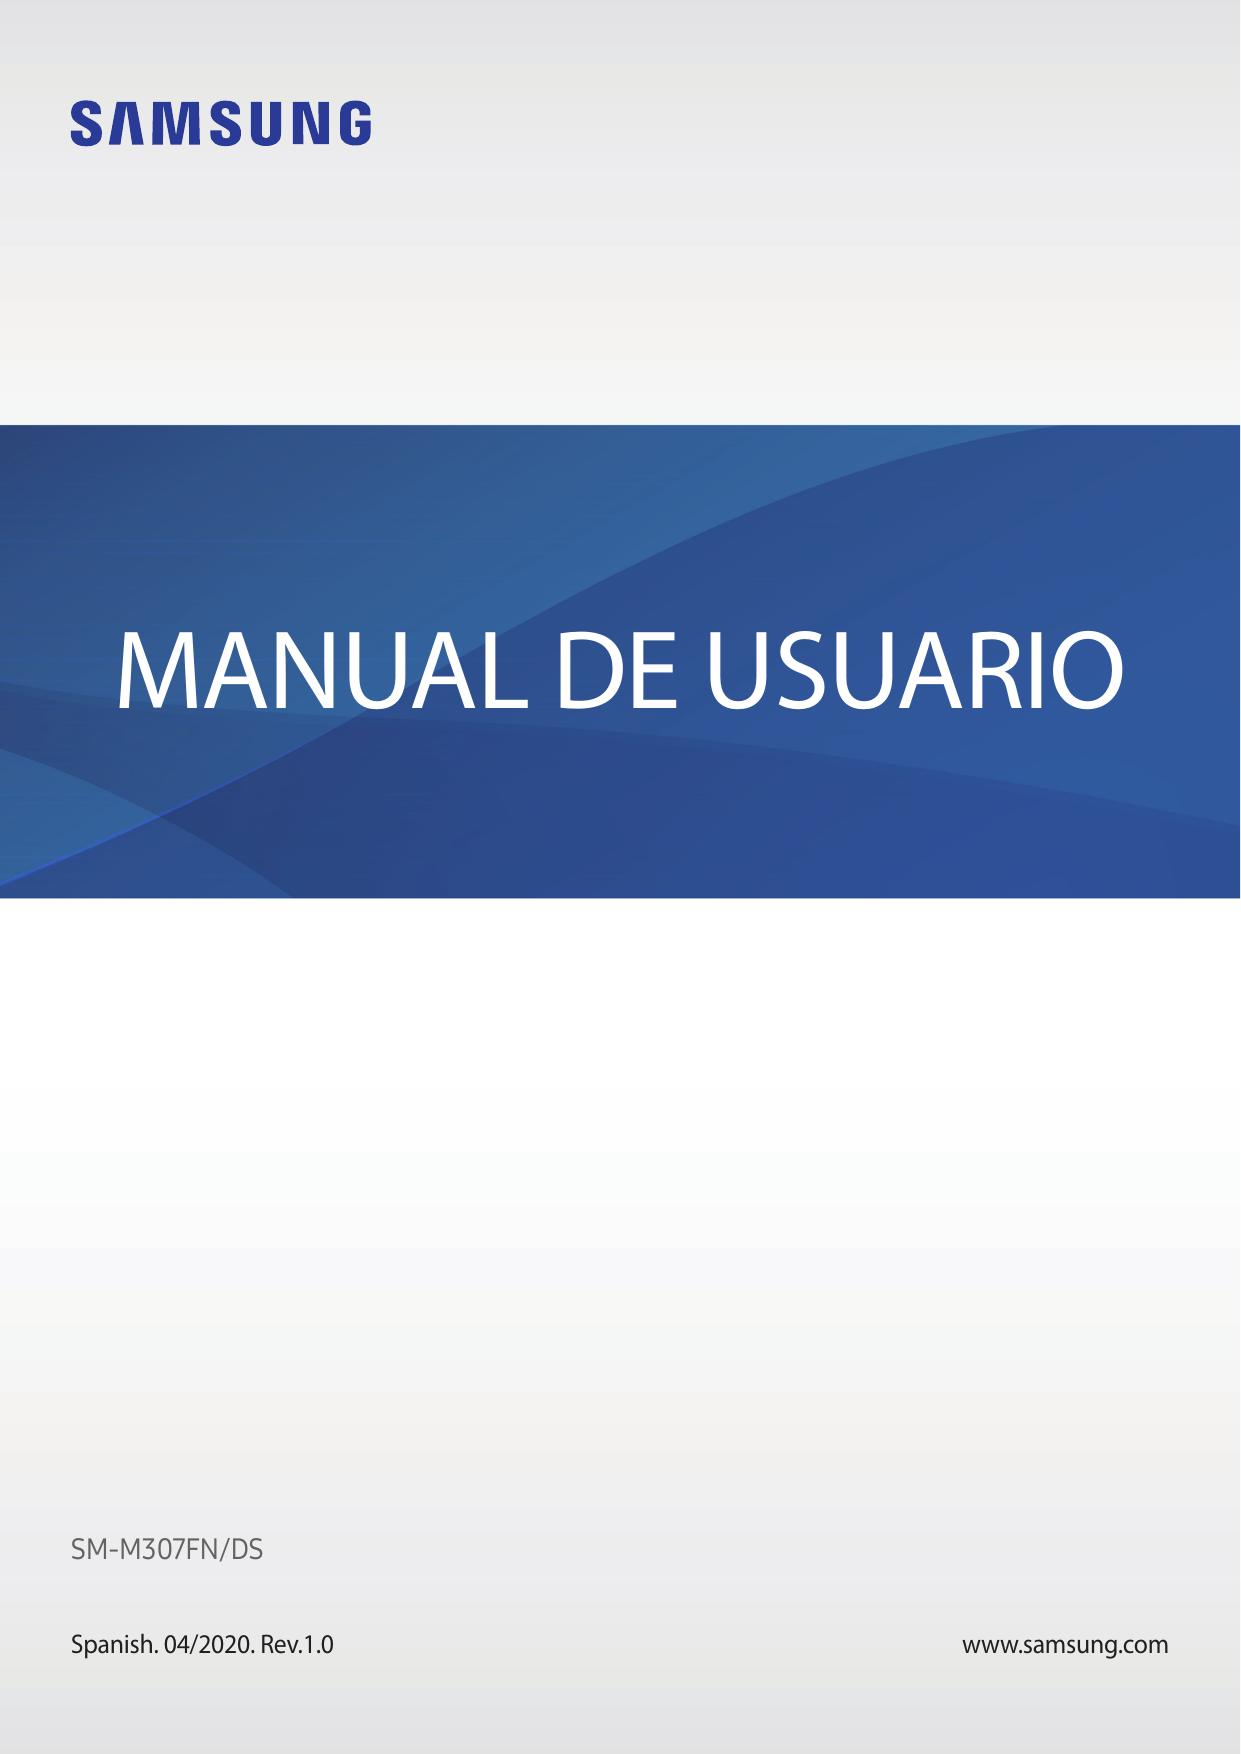 MANUAL DE USUARIOSM-M307FN/DSSpanish. 04/2020. Rev.1.0www.samsung.com